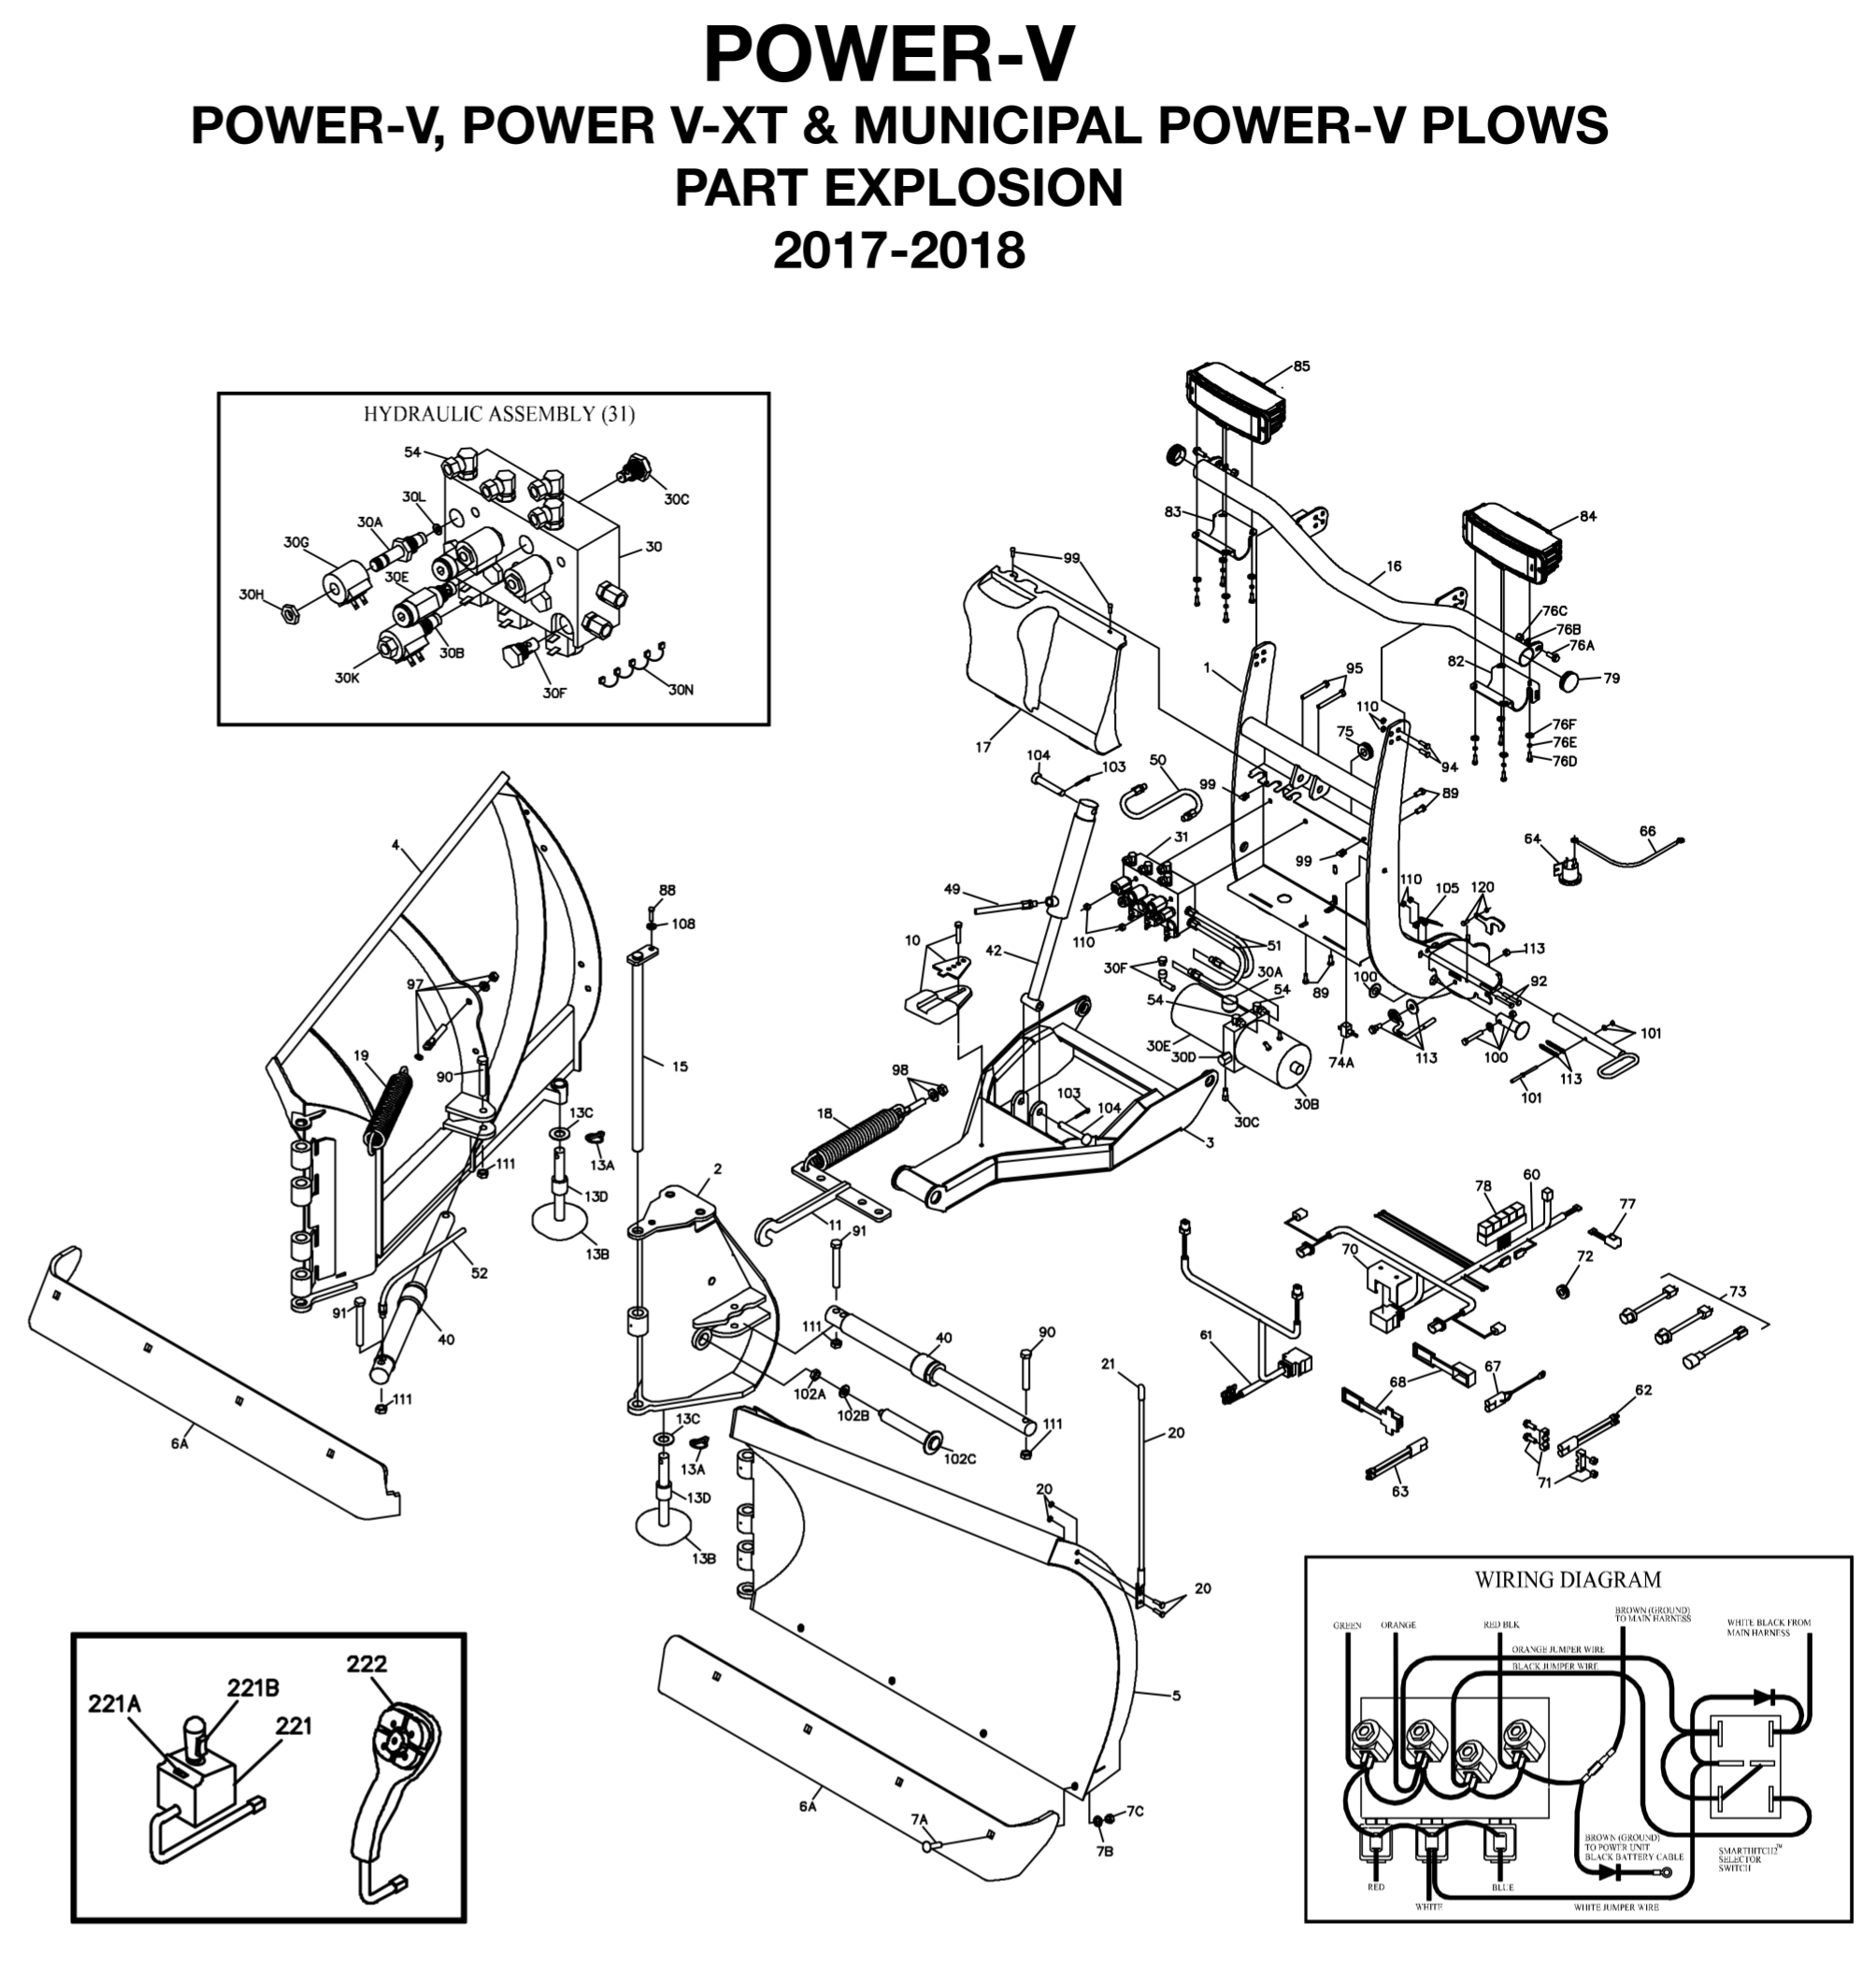 BOSS Power-V and Power-V XT Parts Diagram From ITEParts.com  Boss Power V Xt Wiring Diagram    ITEParts.com